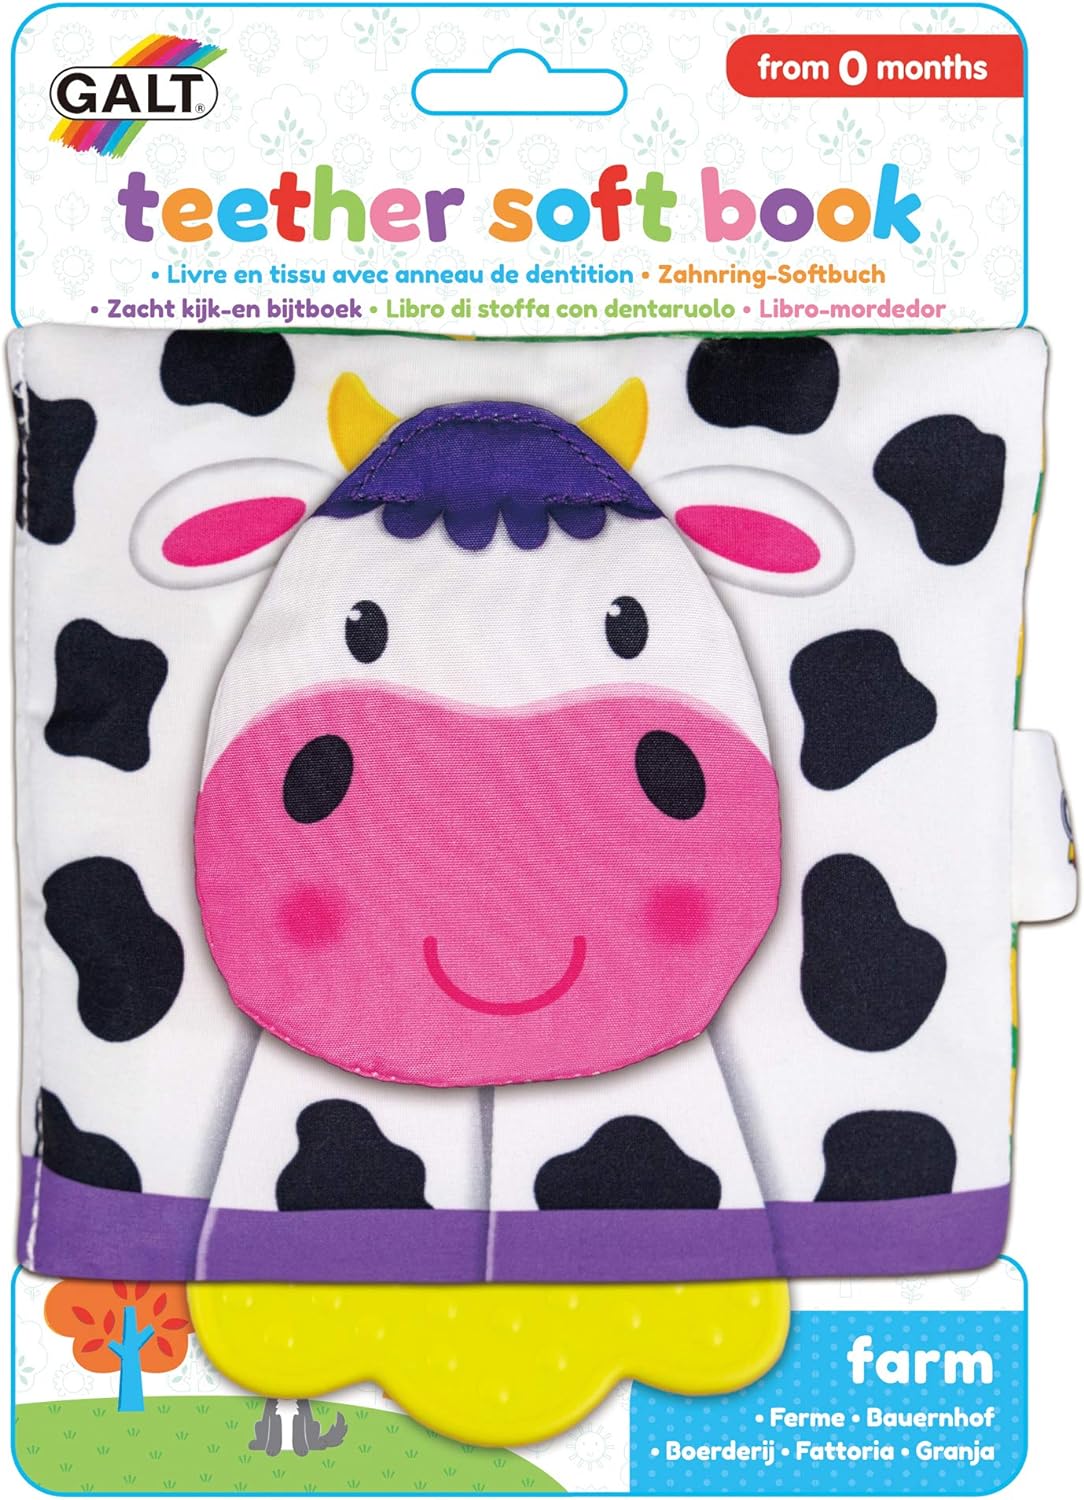 Galt Teether Soft Book: Farm